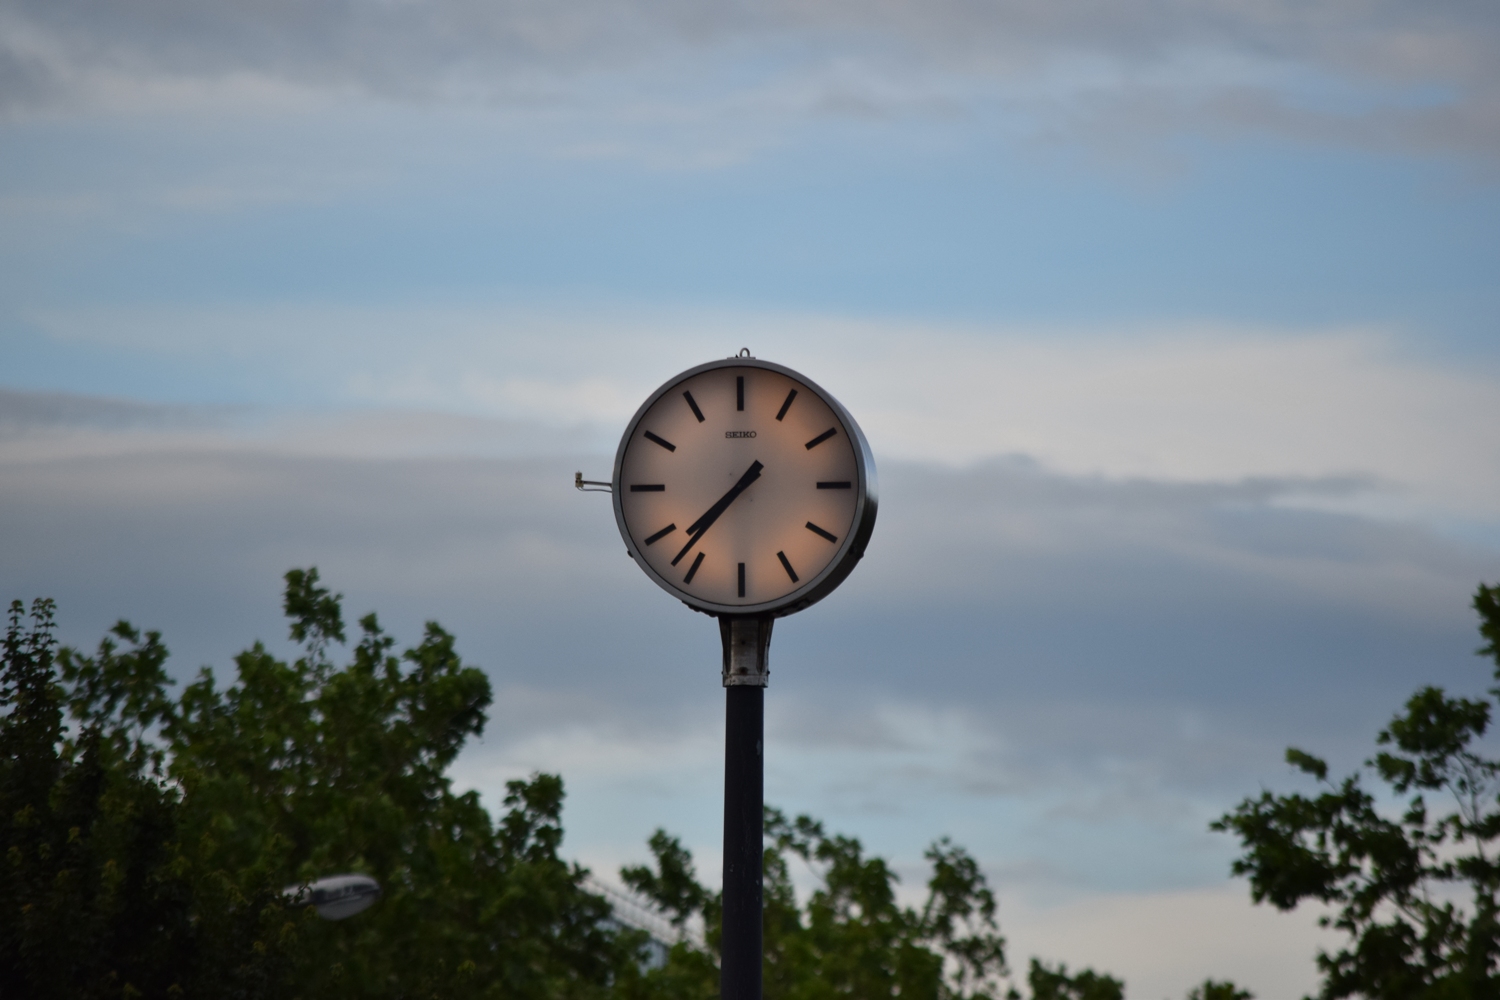 Nikkor 55-300mm clock seen from 30m, Elder Gate, Milton Keynes, 250 mm